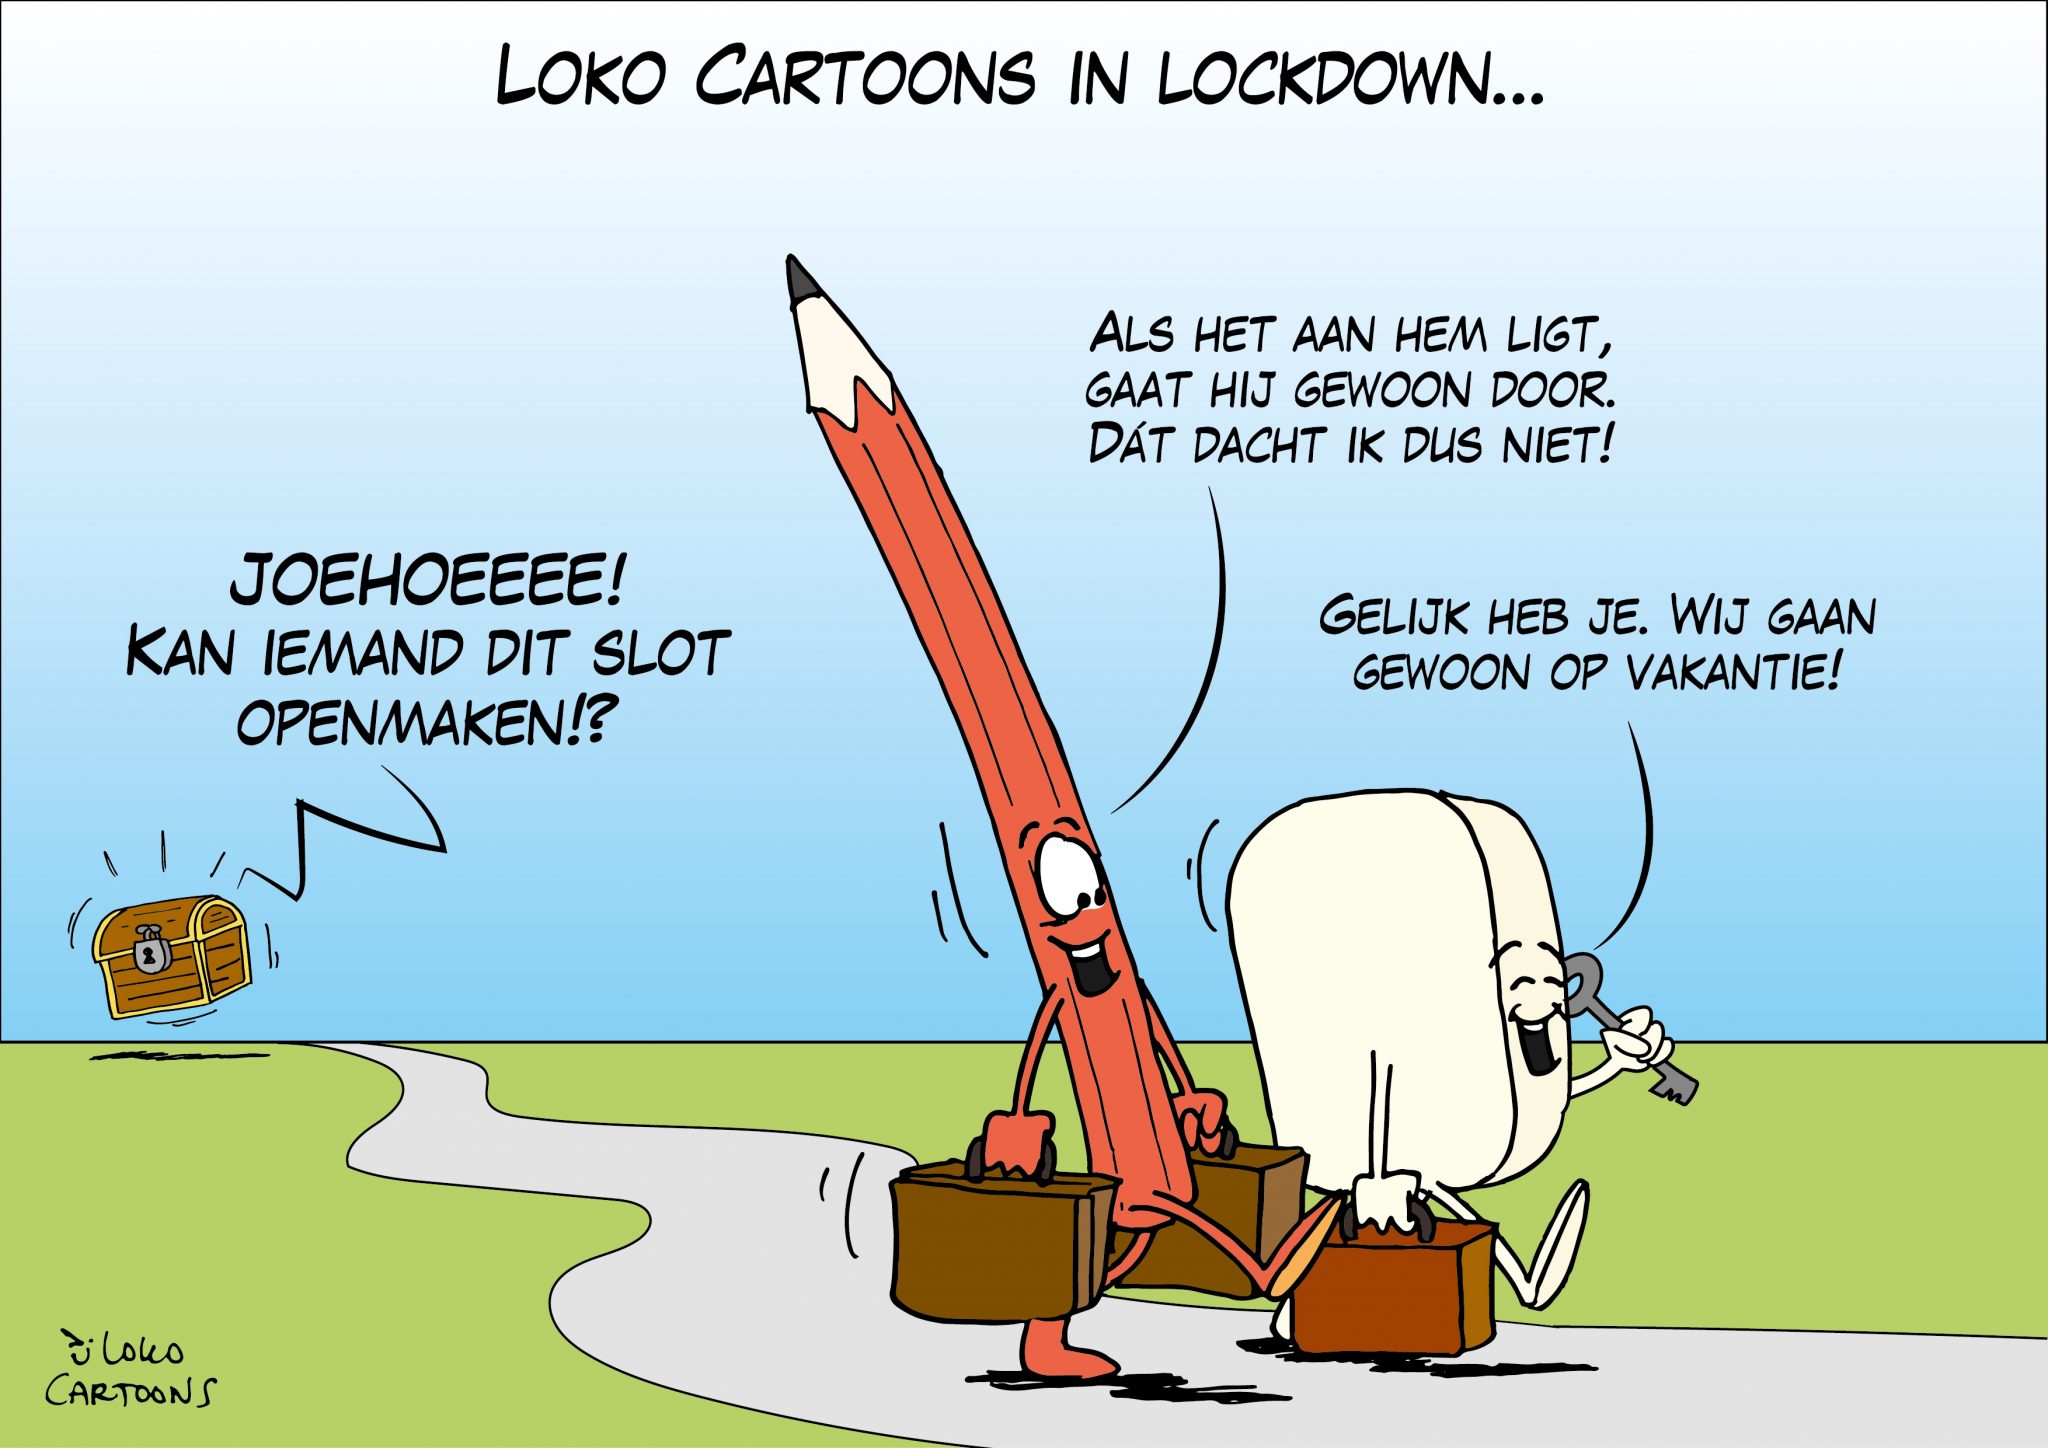 Loko Cartoons in lockdown…